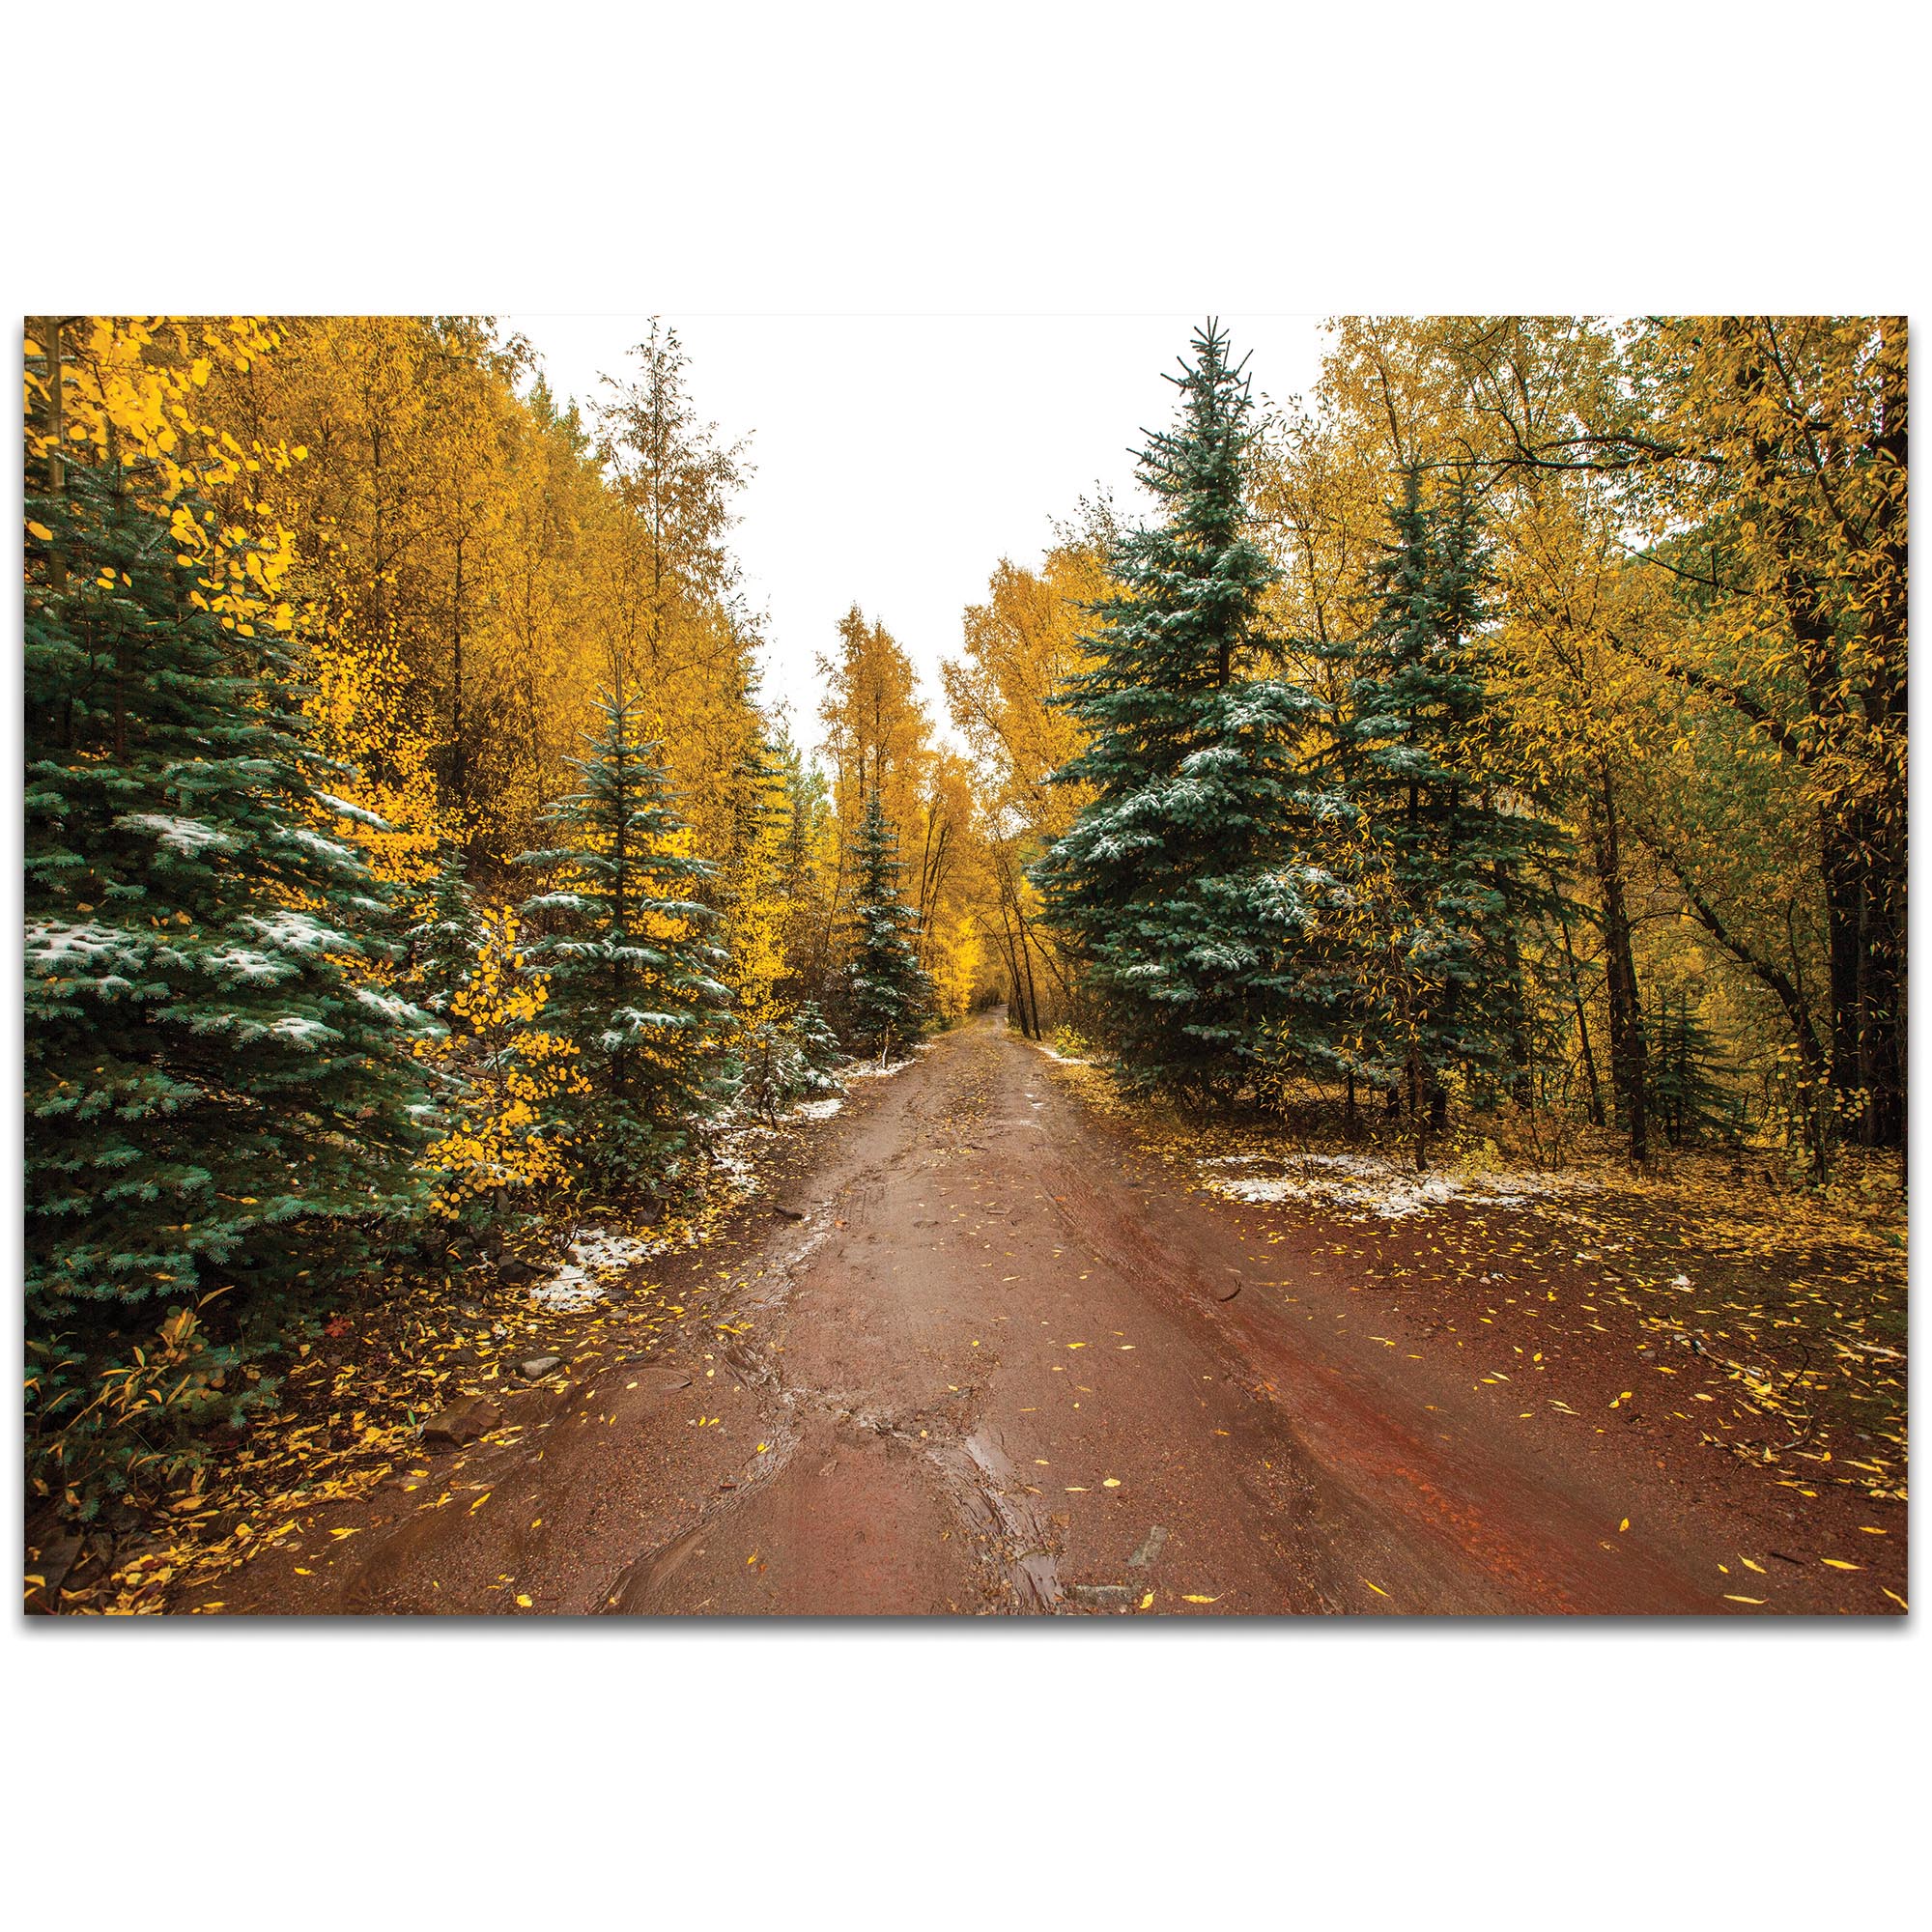 Landscape Photography 'Road Less Traveled' - Autumn Trees Art on Metal or Plexiglass